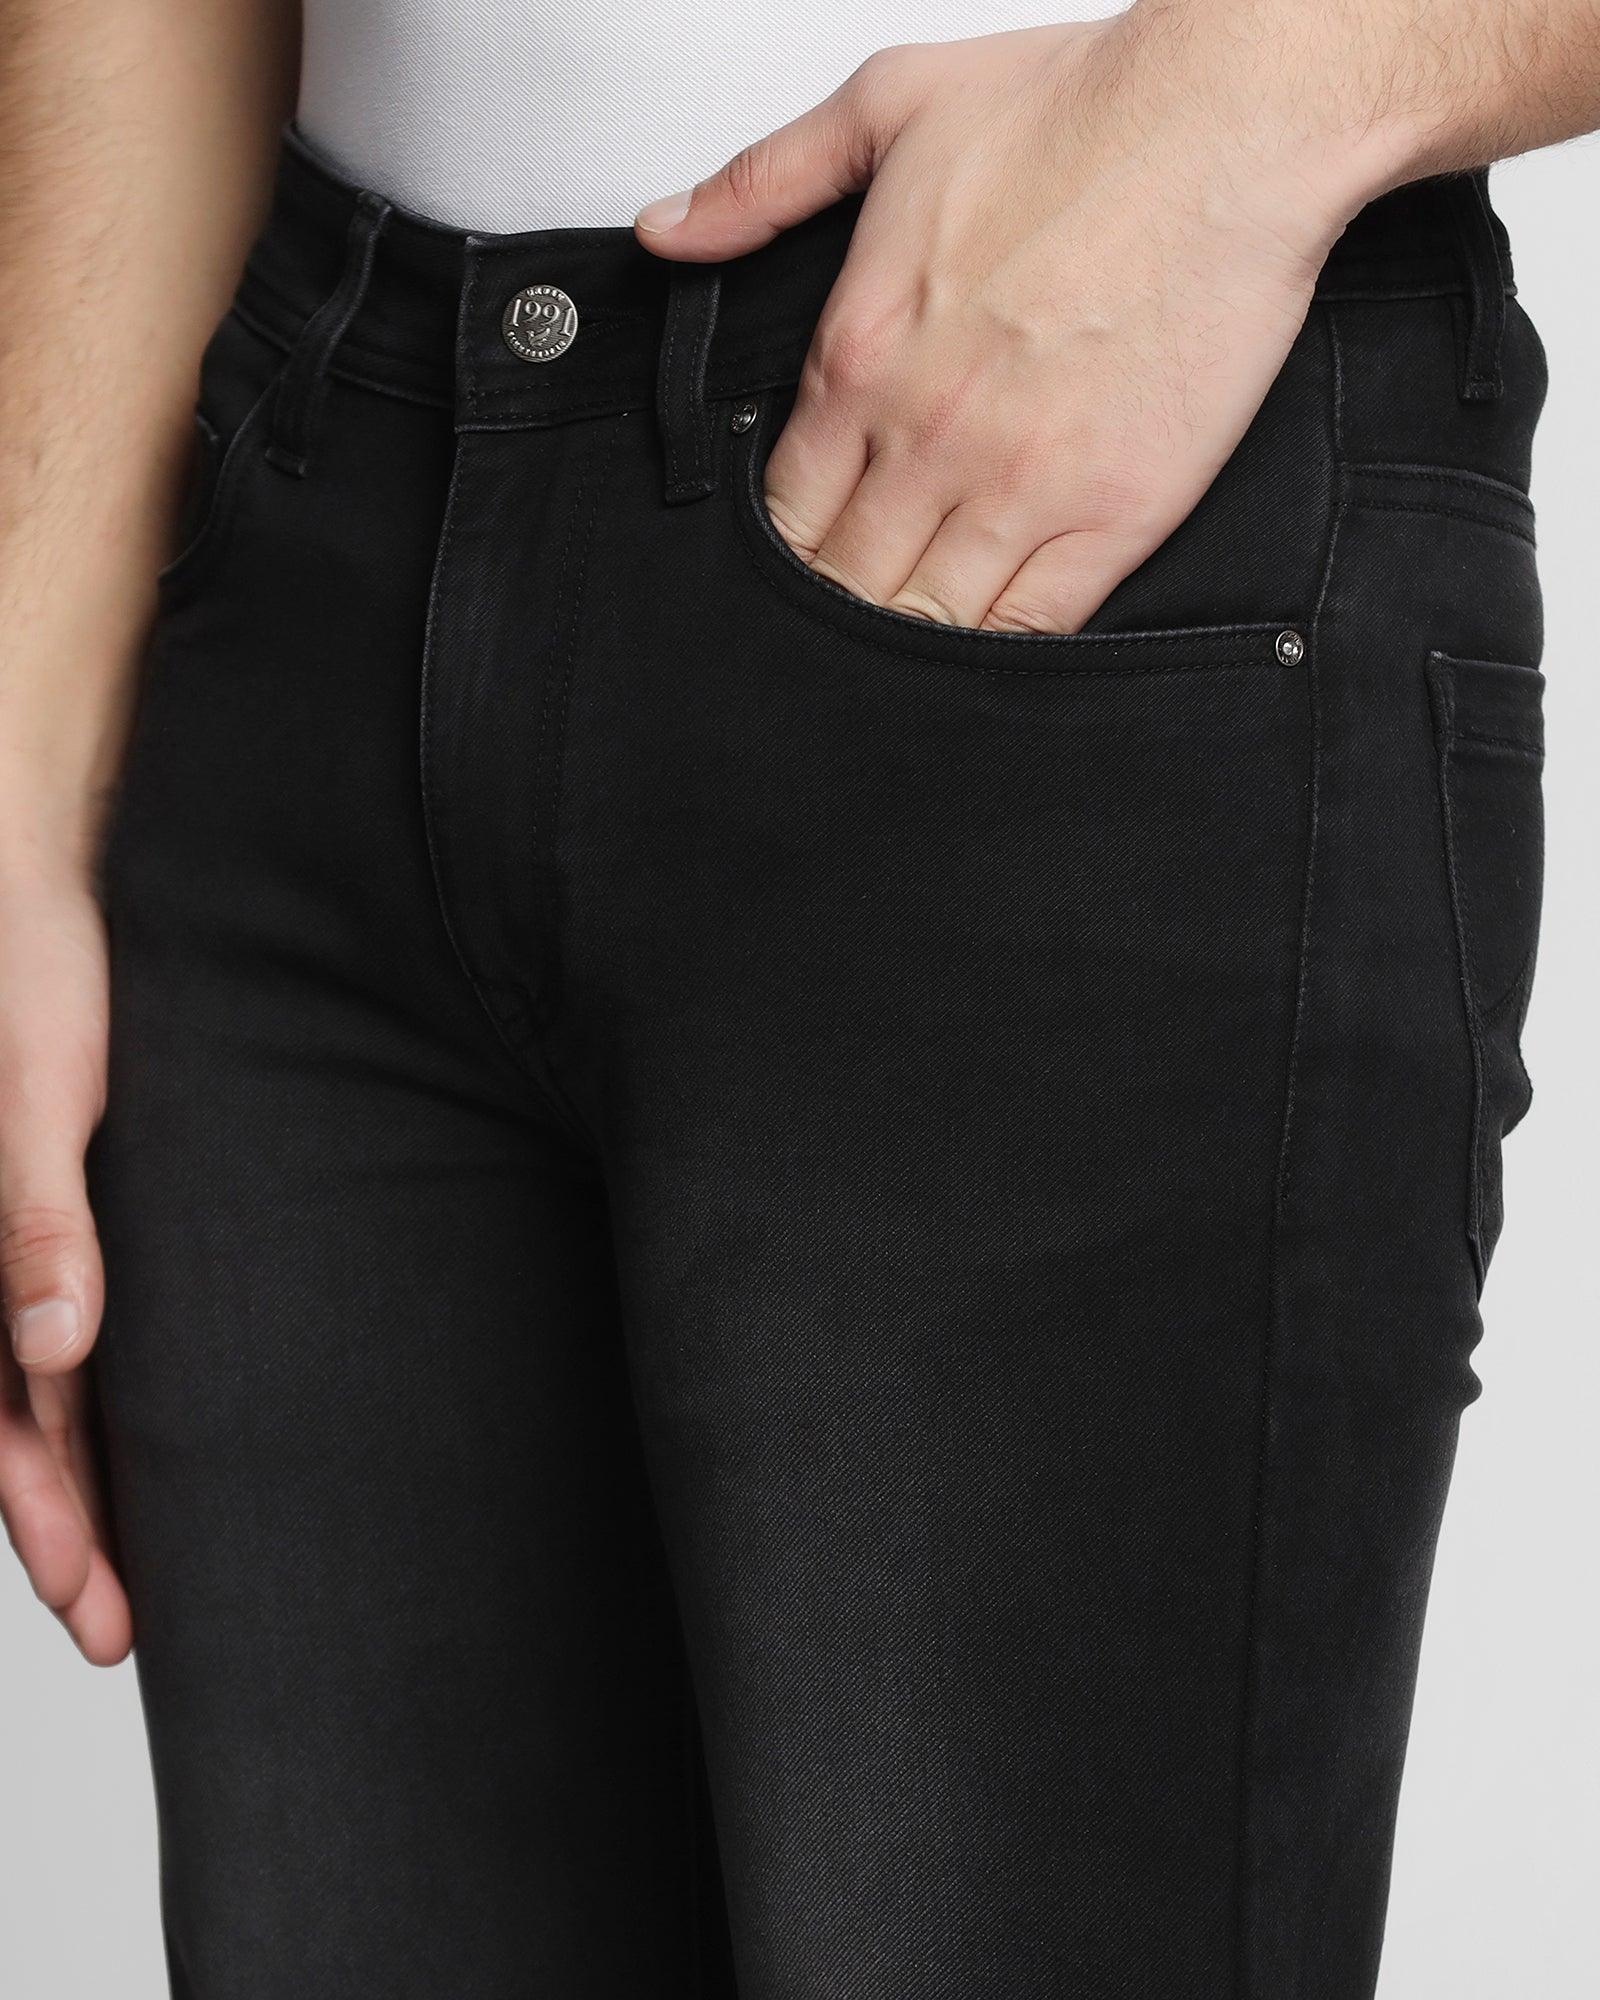 Ultrasoft Slim Comfort Buff Fit Black Jeans - Rory